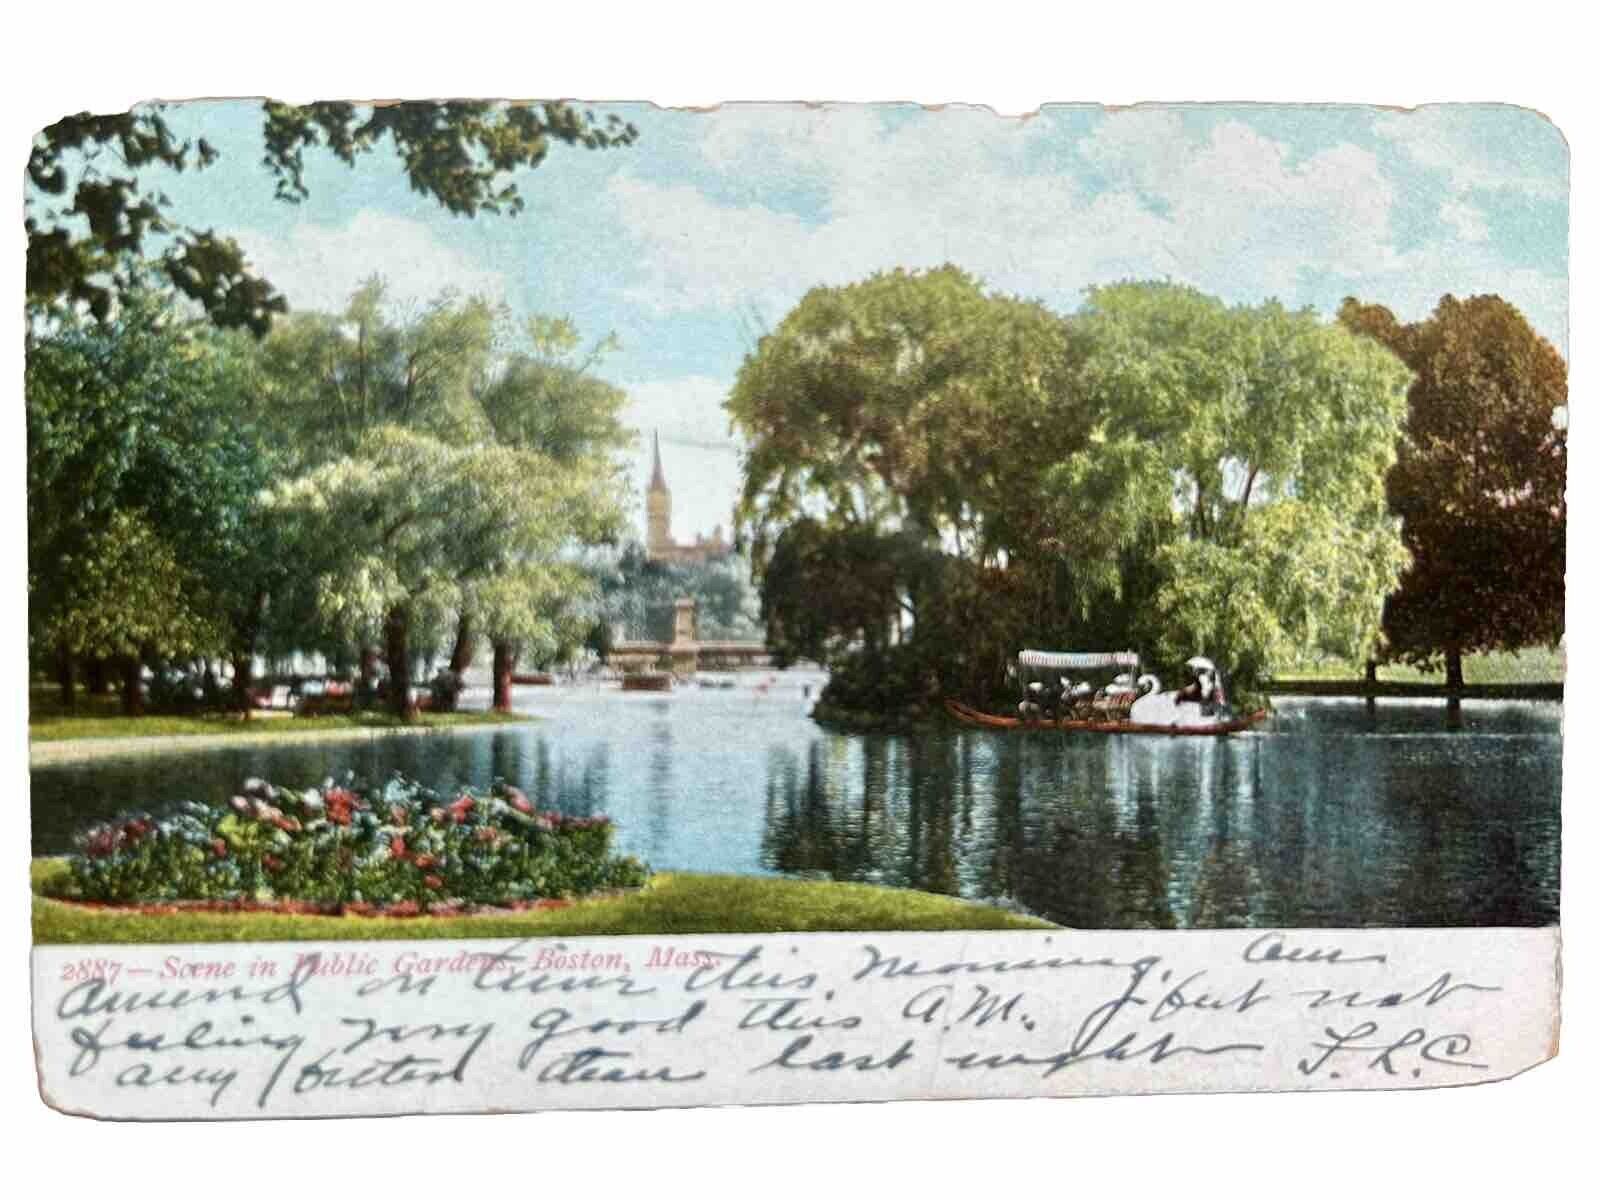 Seen In Public Garden, Boston Massachusetts Undivided Back Vintage Postcard 1906